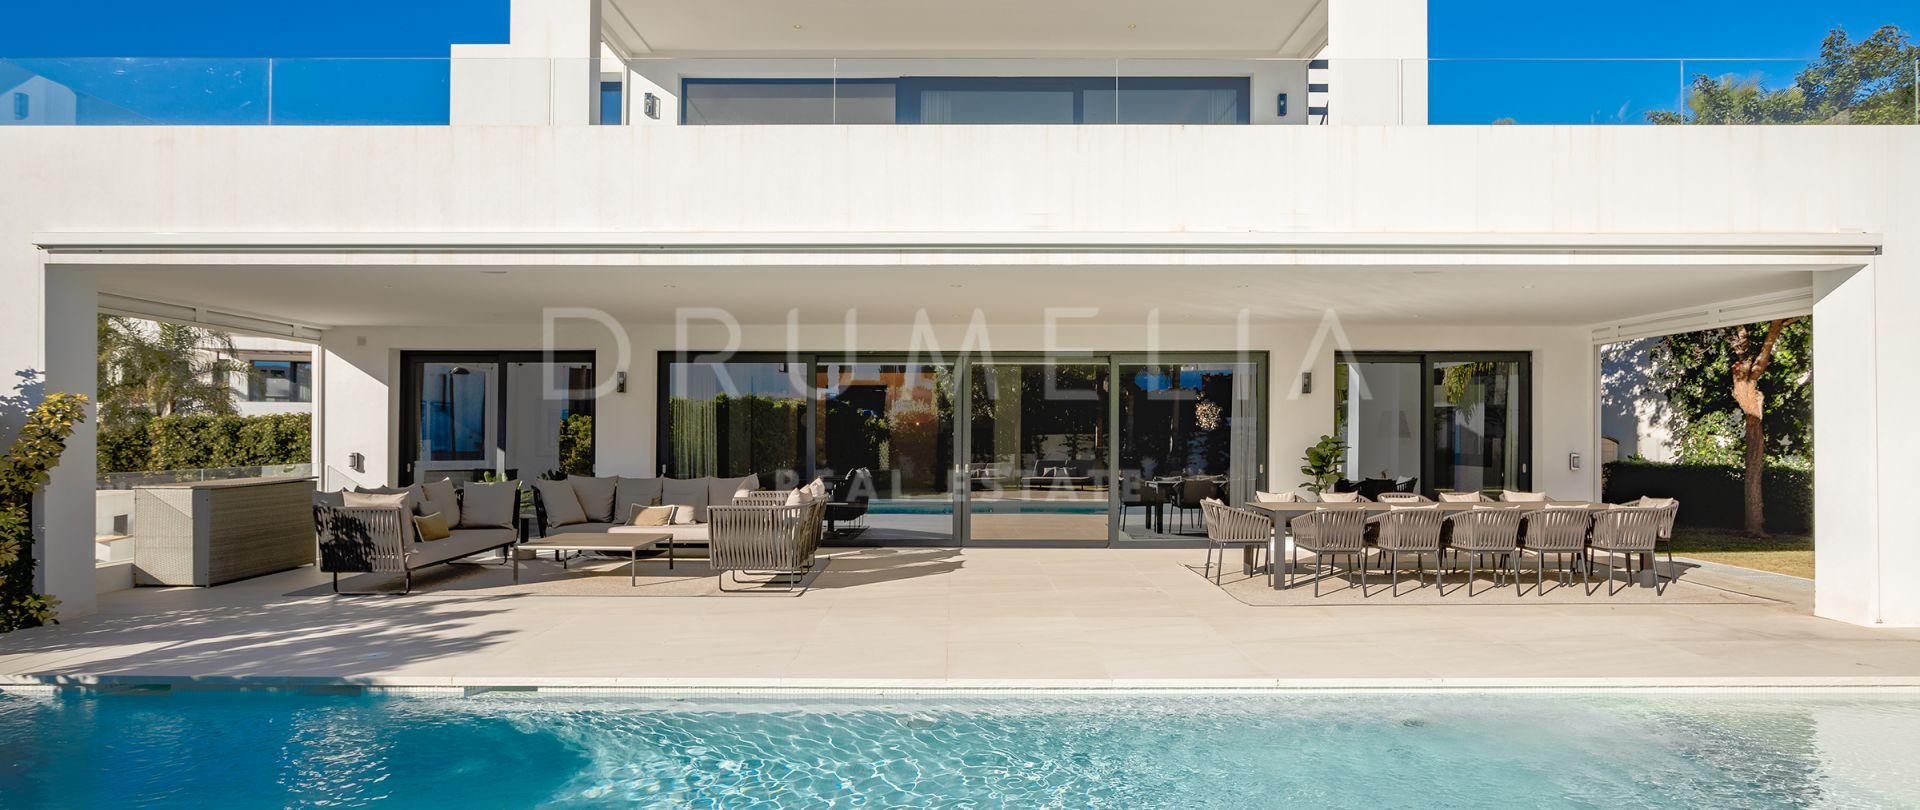 Spectaculaire luxe villa in hedendaagse stijl te koop in Los Olivos in Golf Valley, Marbella